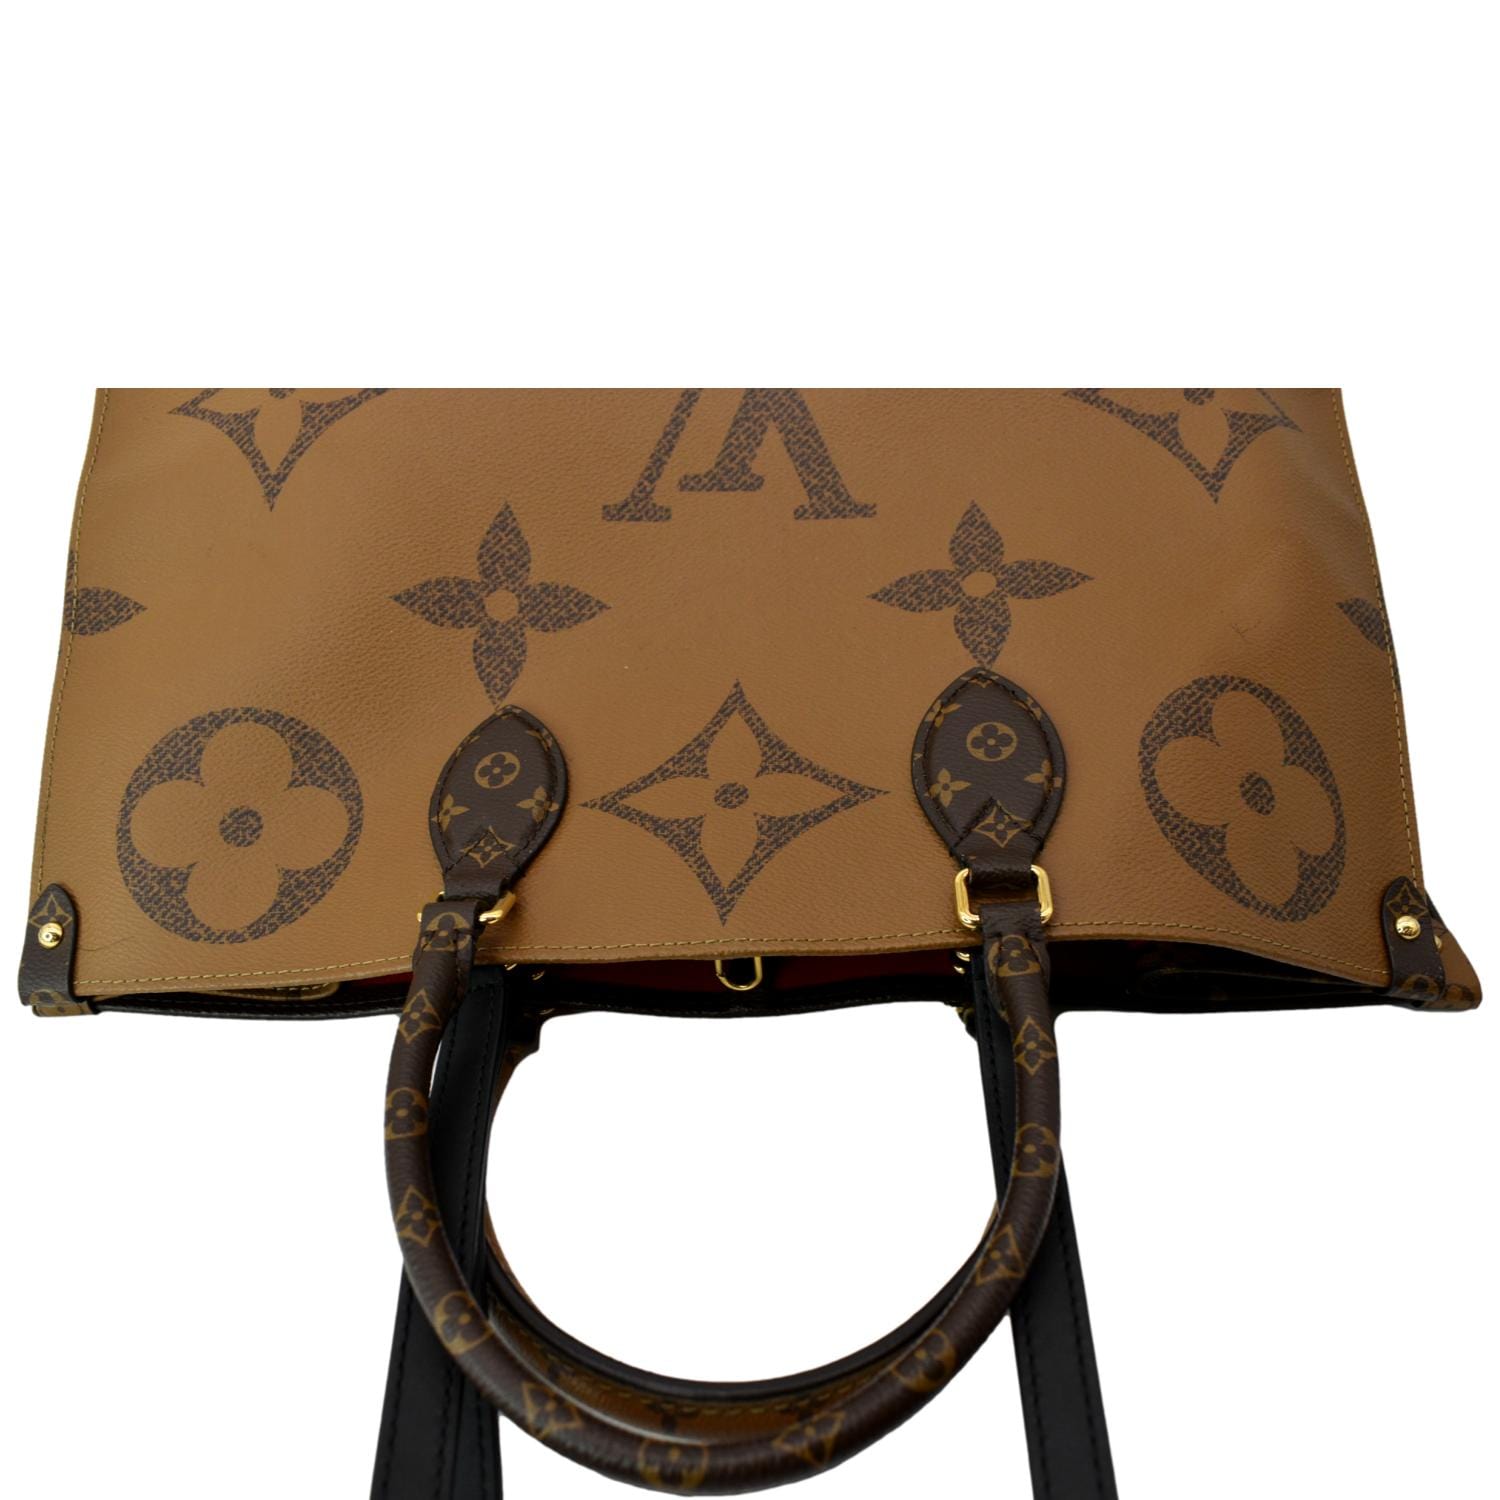 Louis Vuitton - OnTheGo GM Monogram - Top Handle Tote w/ Shoulder